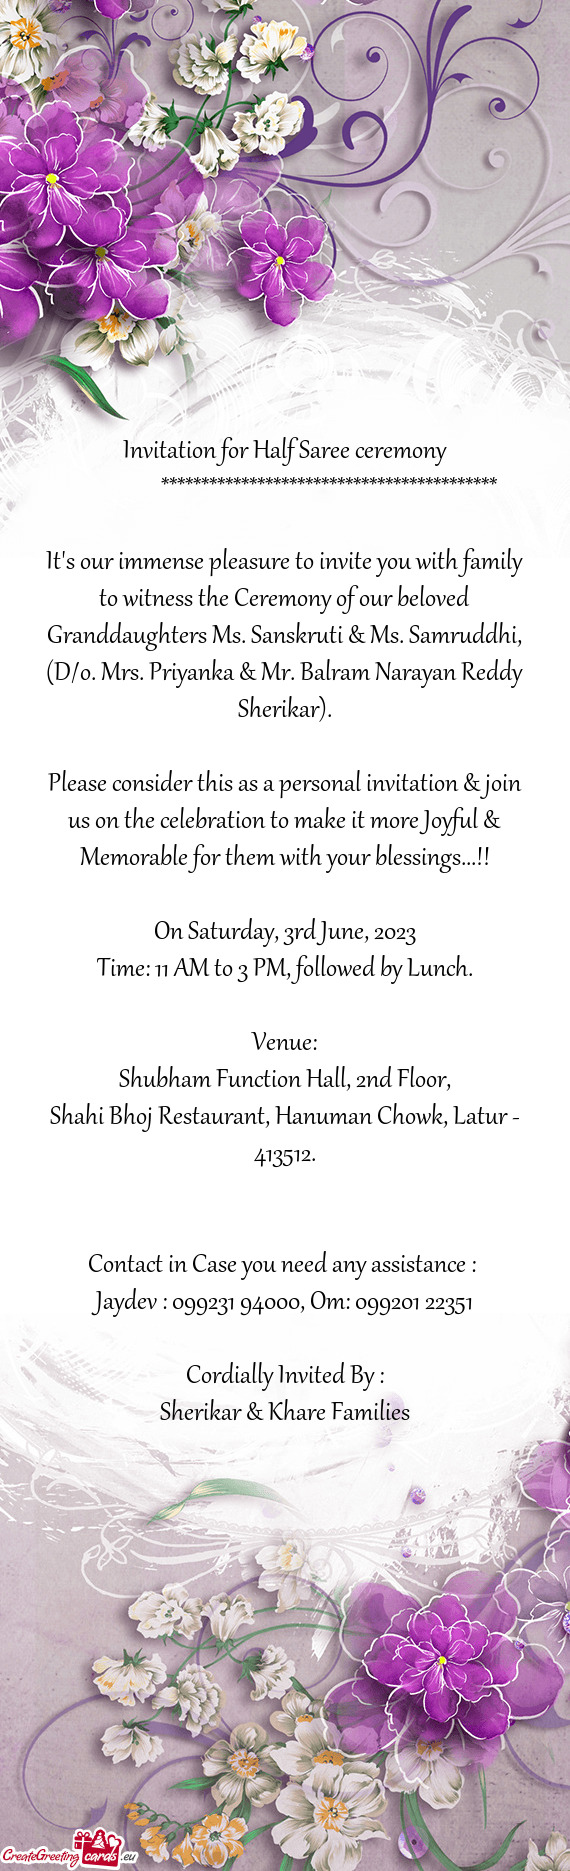 Invitation for Half Saree ceremony